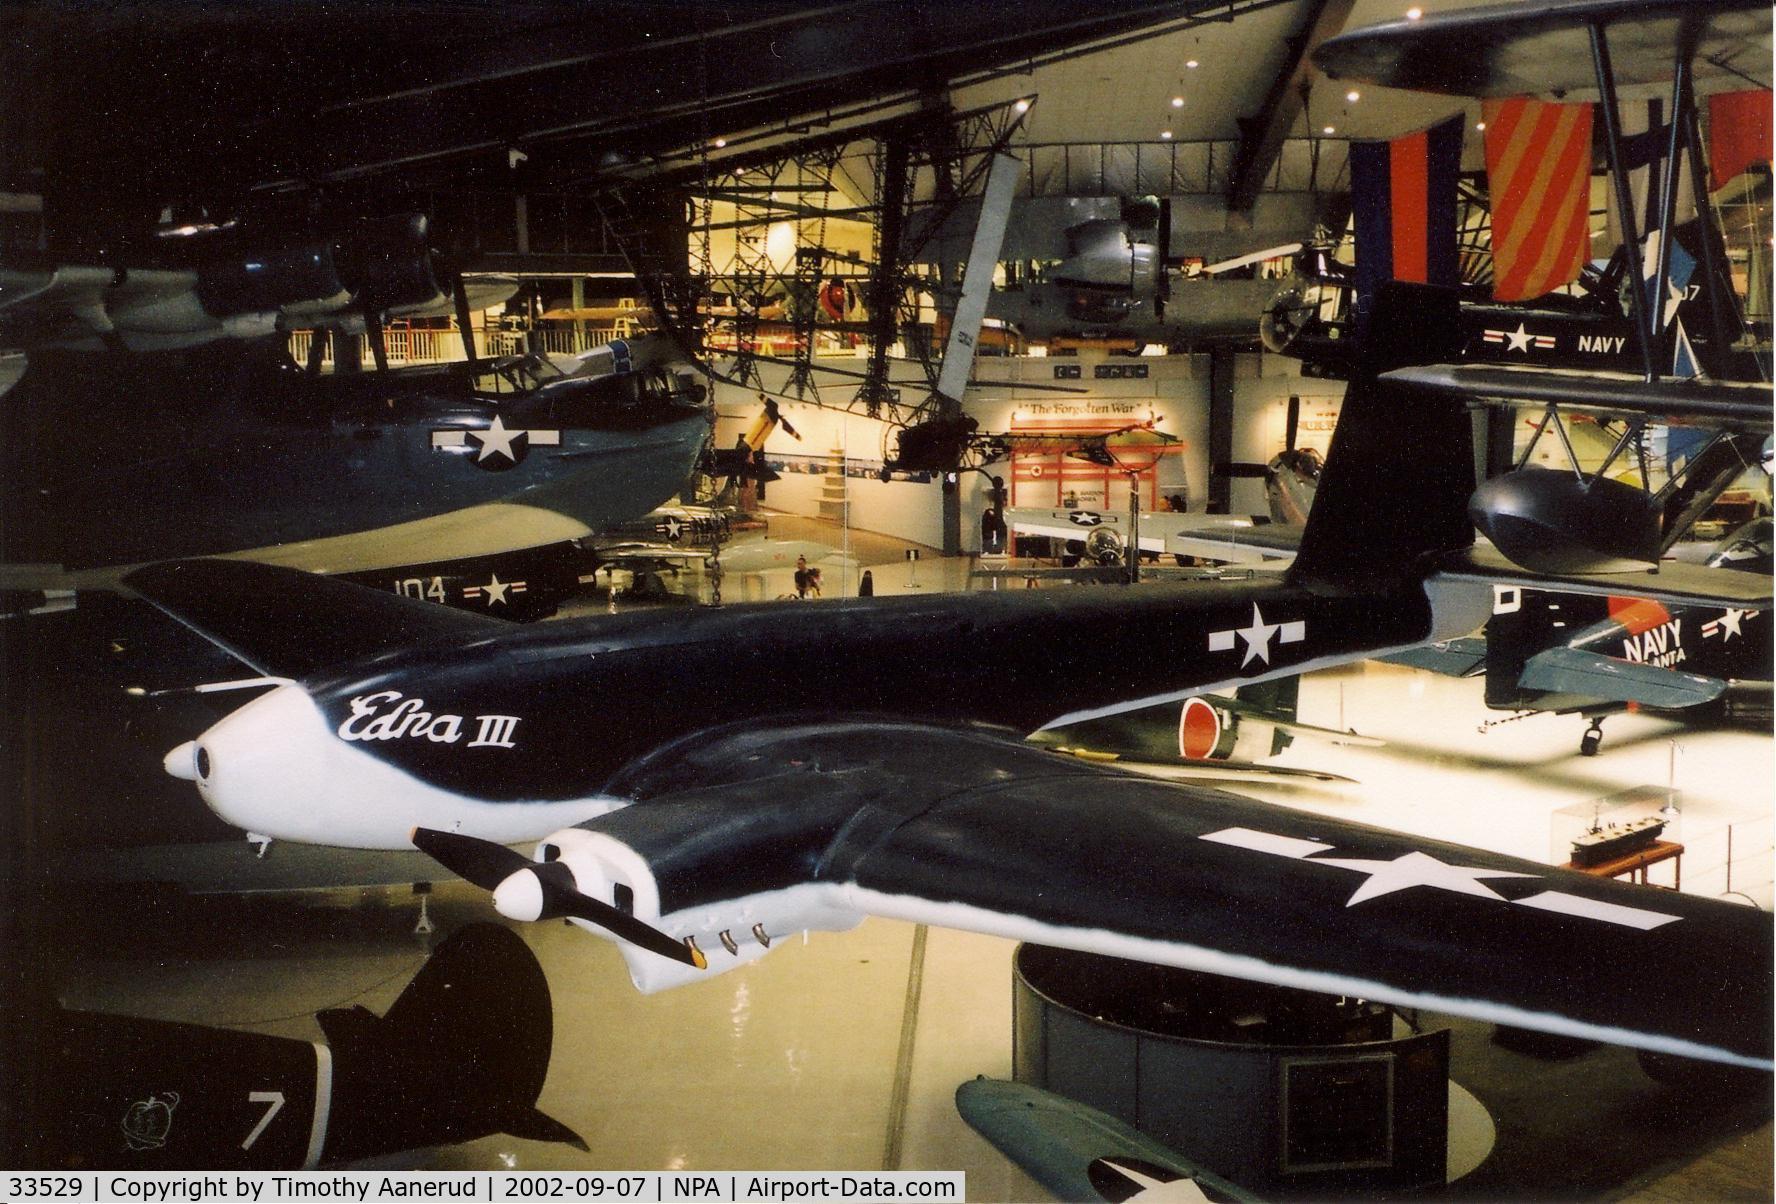 33529, Interstate Aviation and Engineering Corporation TDR-1 C/N 33529, National Museum of Navation Avation, Edna-III, WW-II era UAV